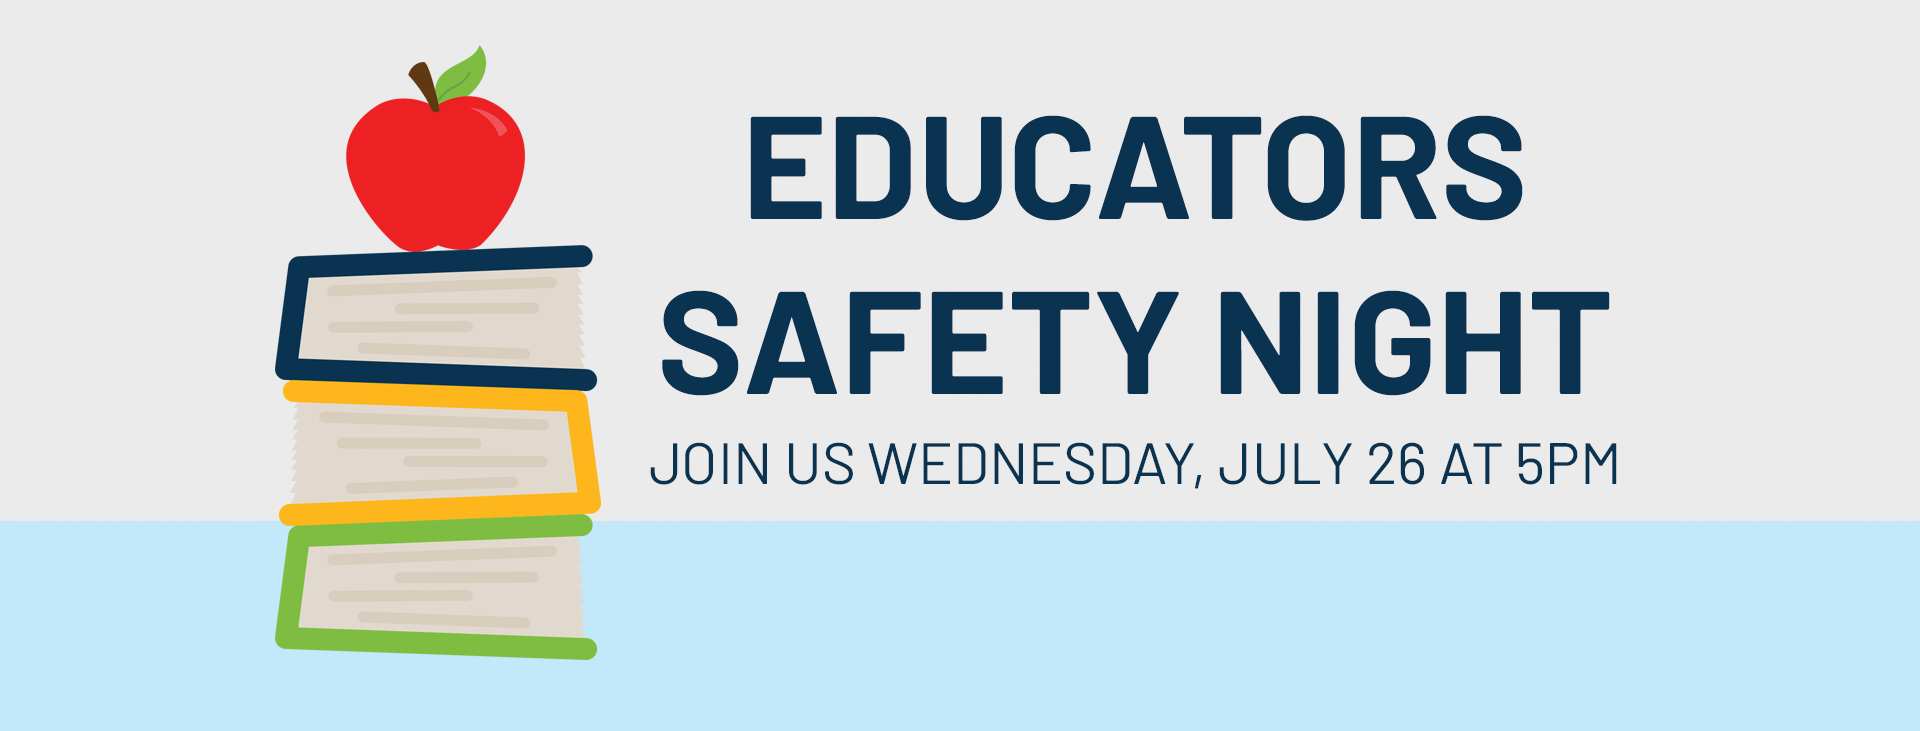 Educators Safety Night